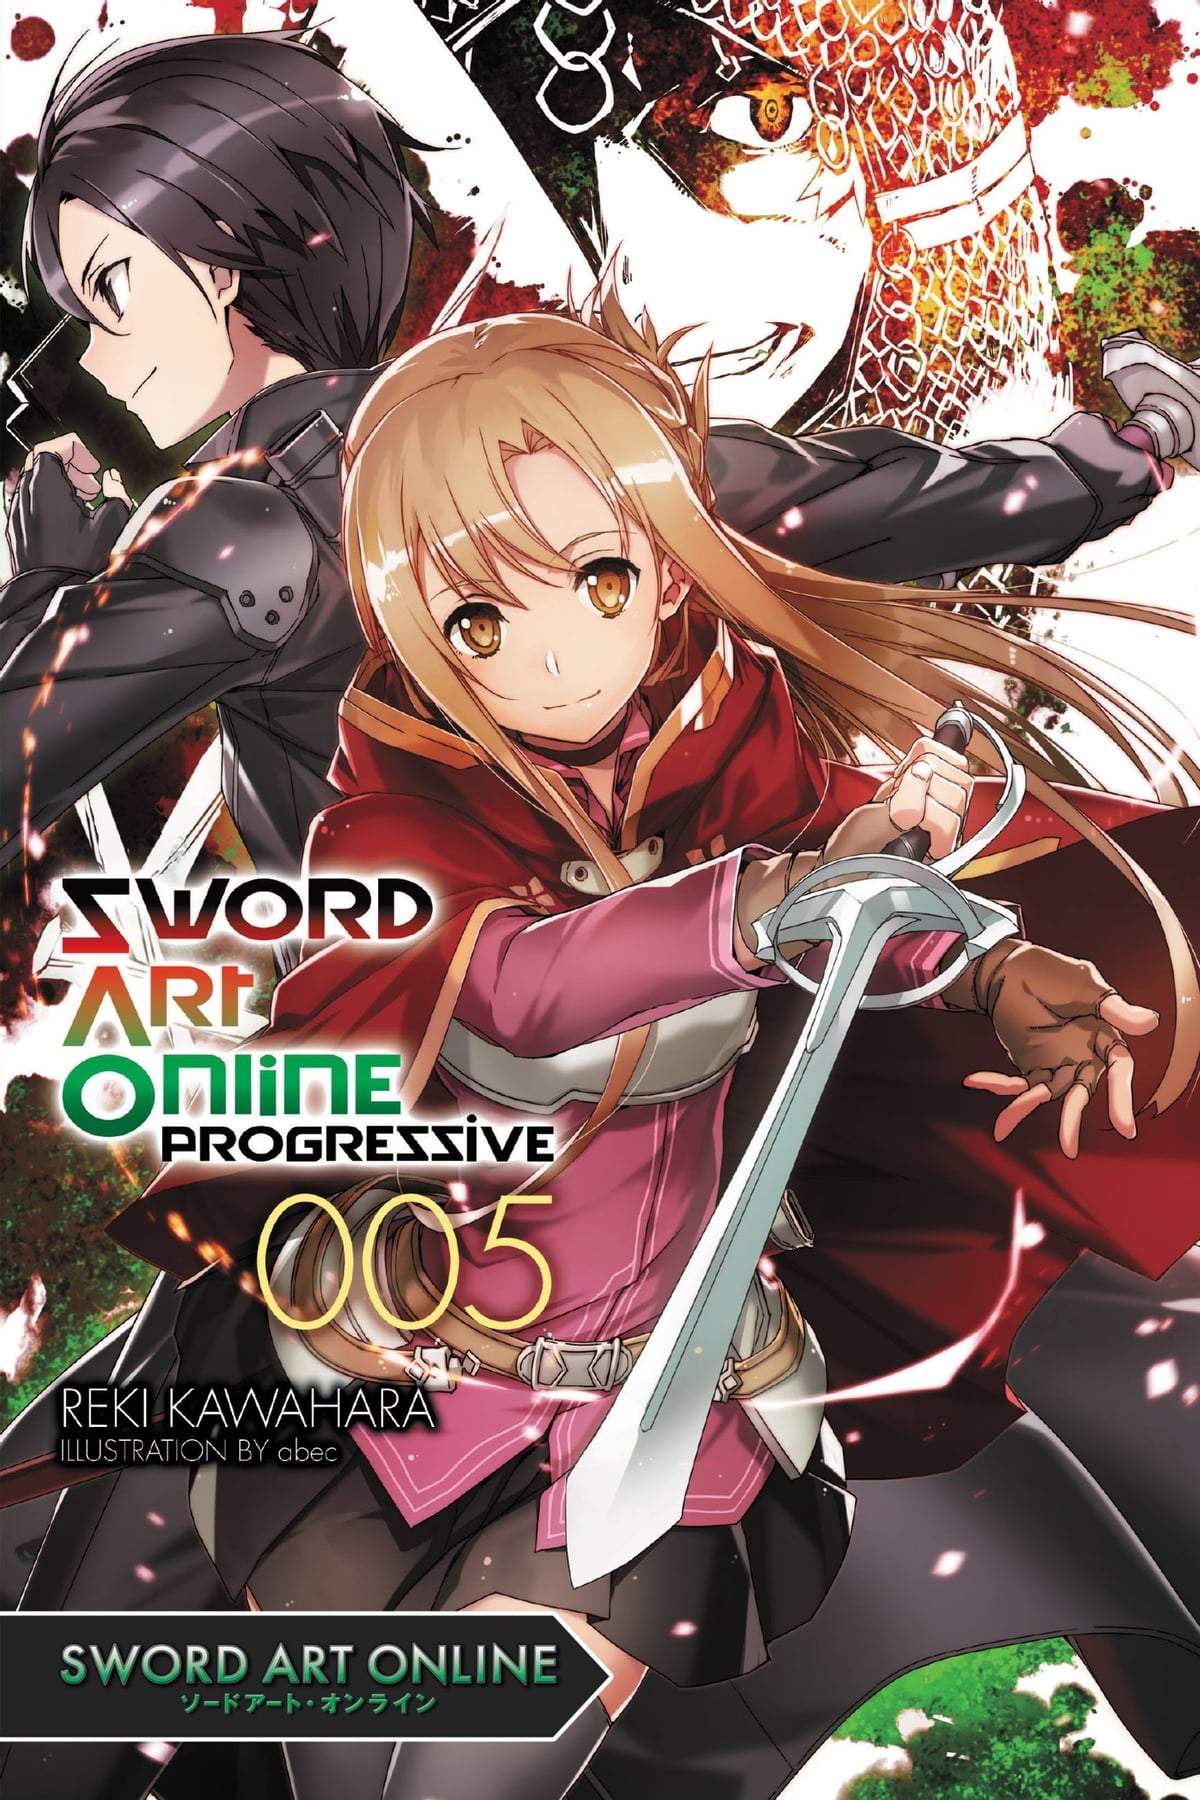 Sword Art Online Progressive Vol. 05 (Light Novel)